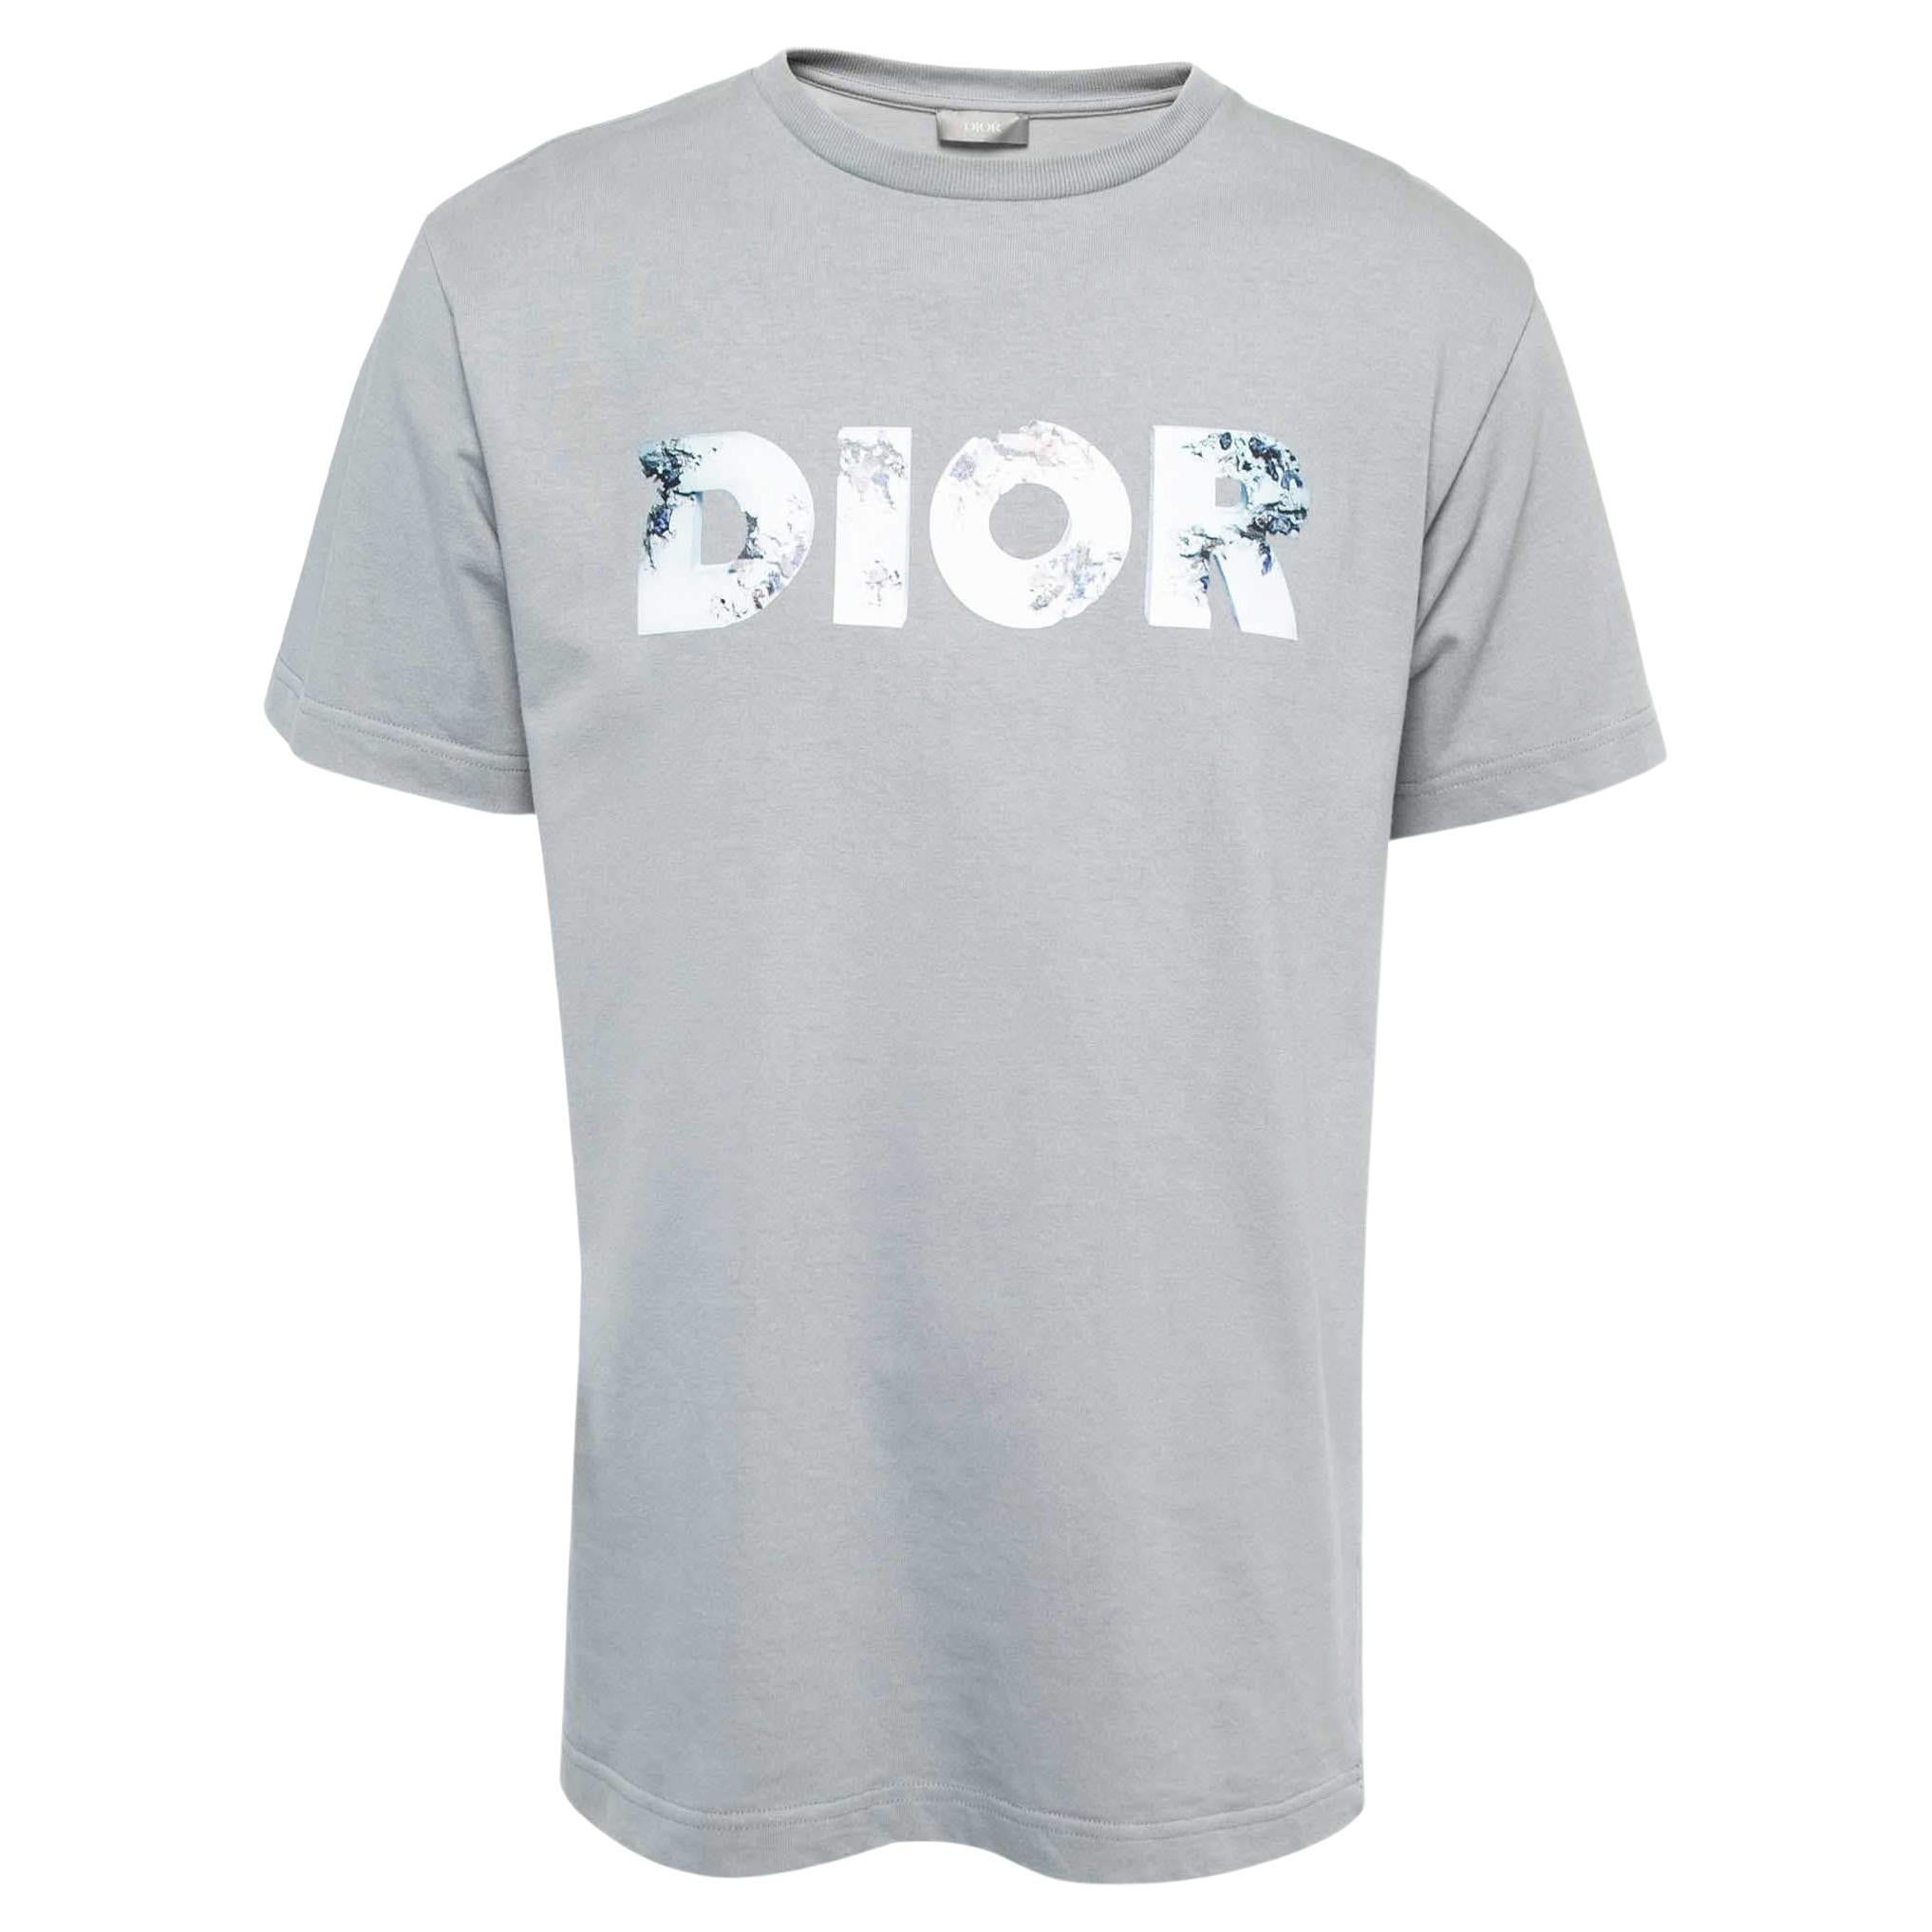 Dior Homme X Daniel Arsham Grey Eroded Logo Print Cotton Crew Neck T-Shirt M